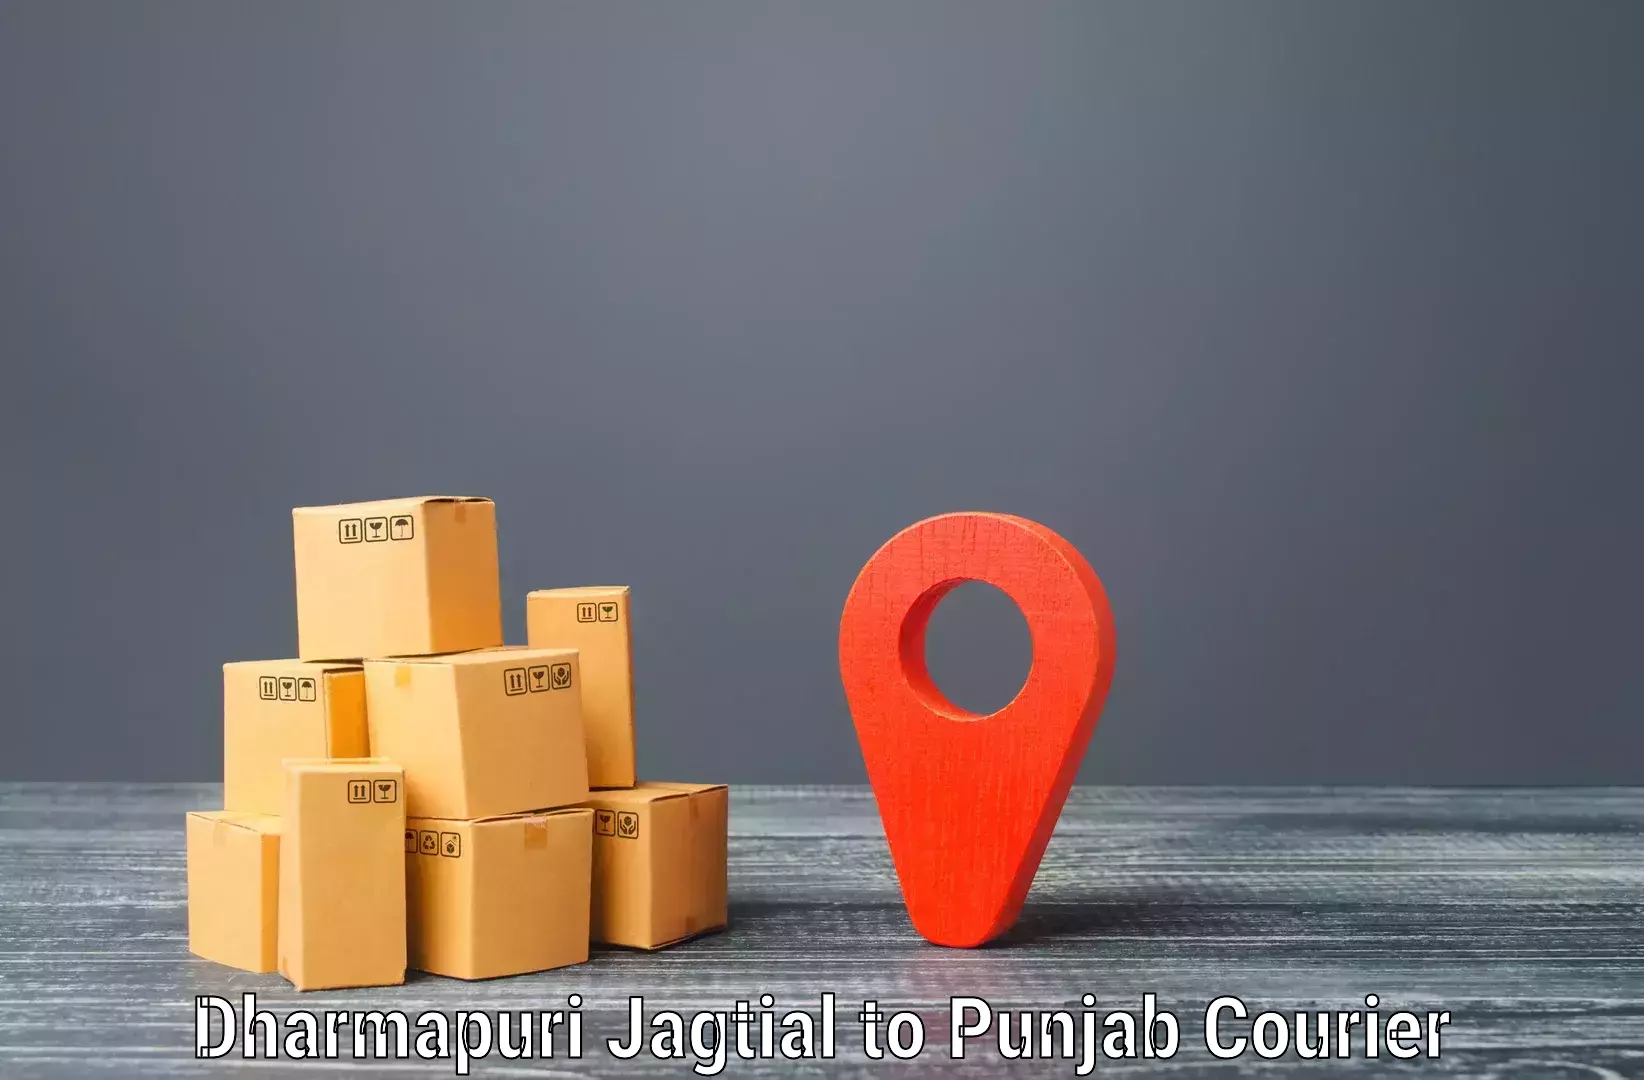 Global logistics network Dharmapuri Jagtial to Talwandi Sabo